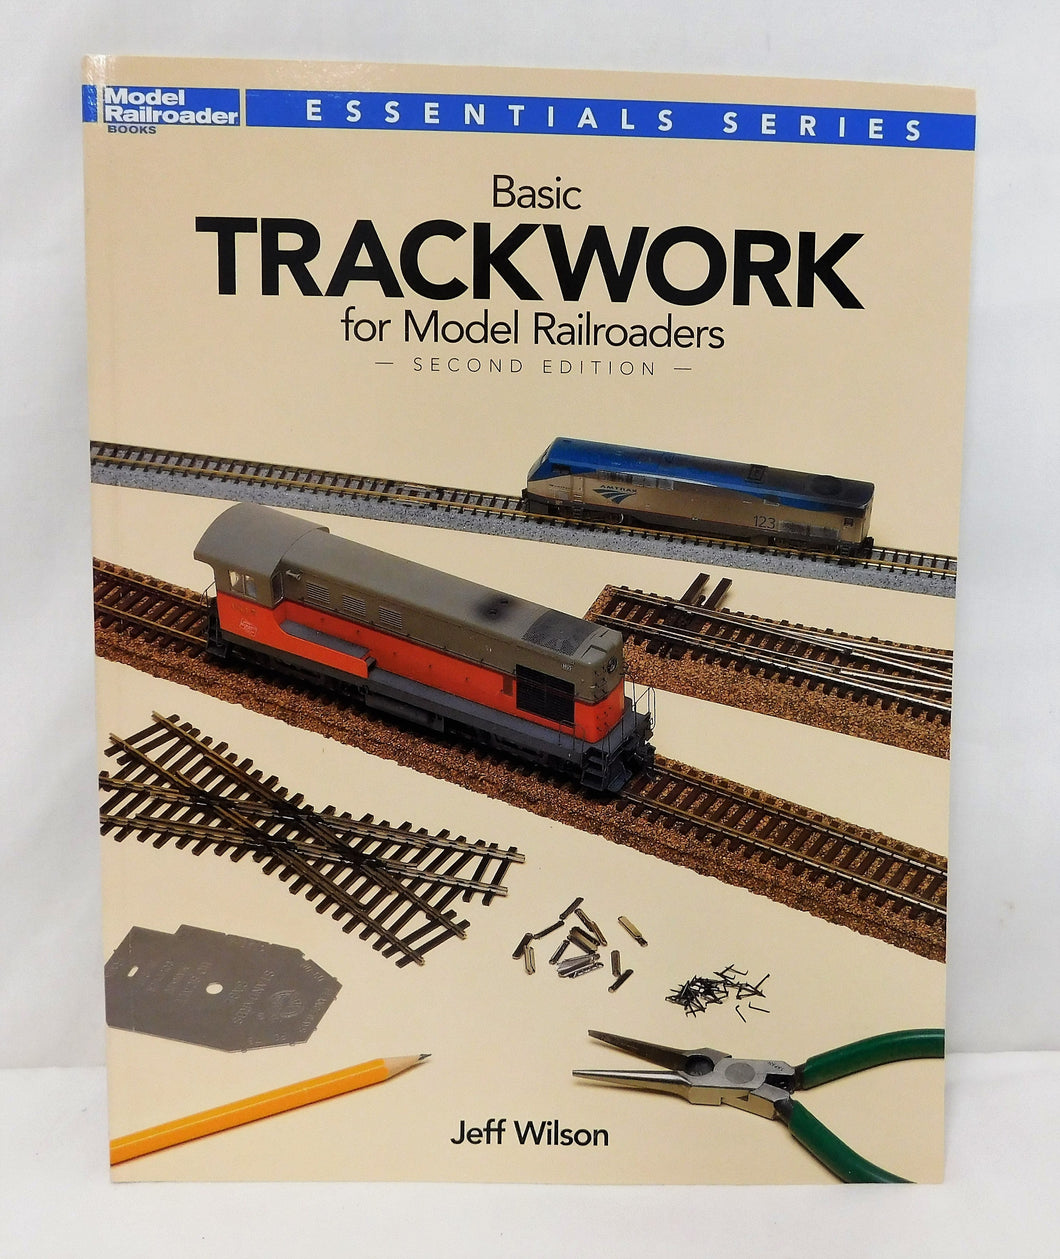 Basic Trackwork for Railroaders 2nd edition #12479 Kalmbach Book Jeff Wilson